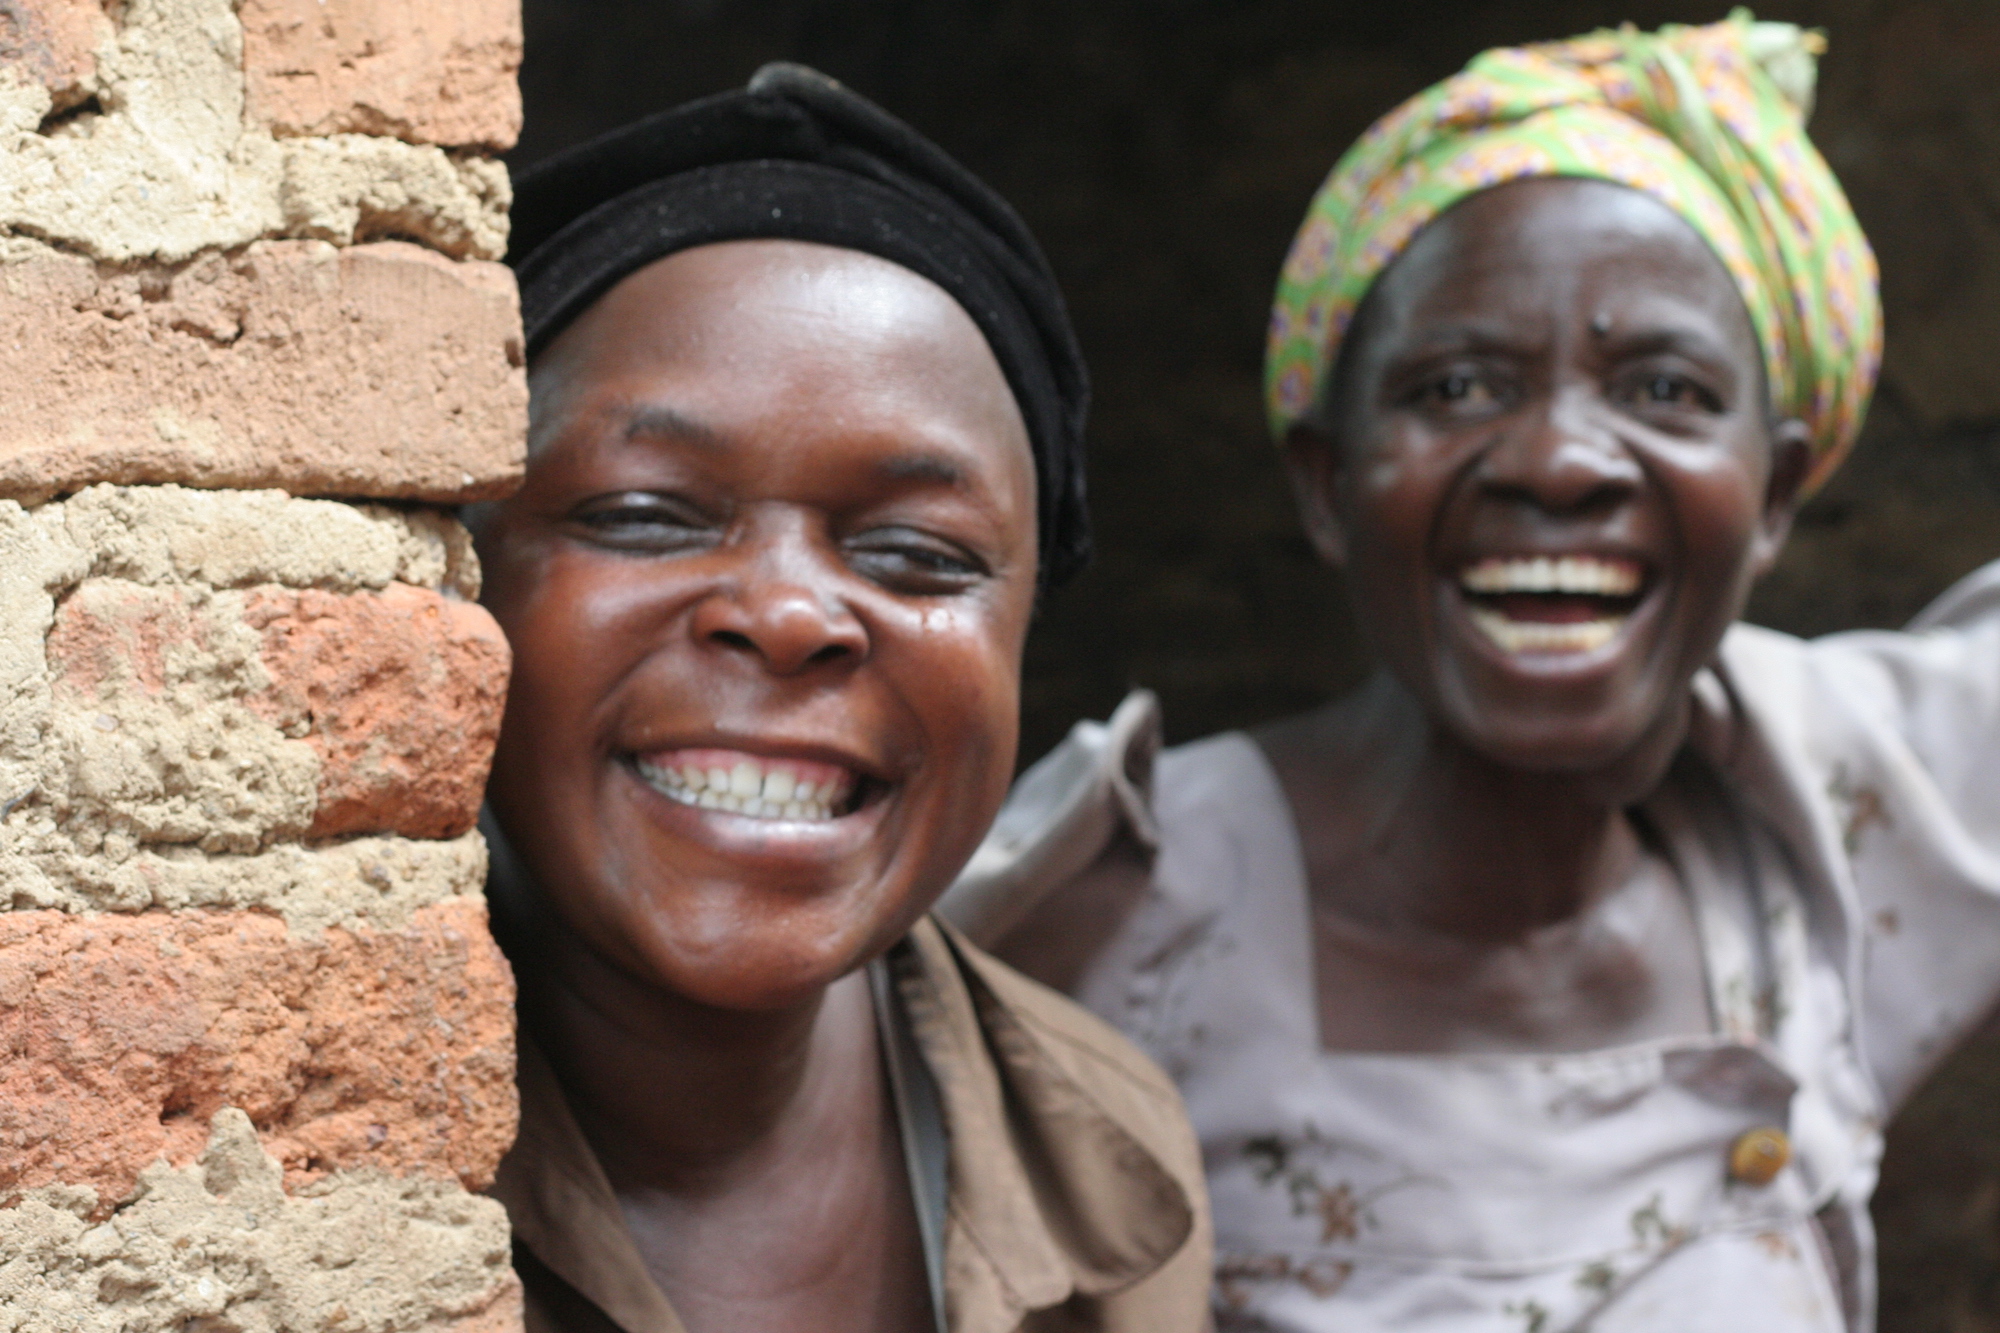 Two women smiling